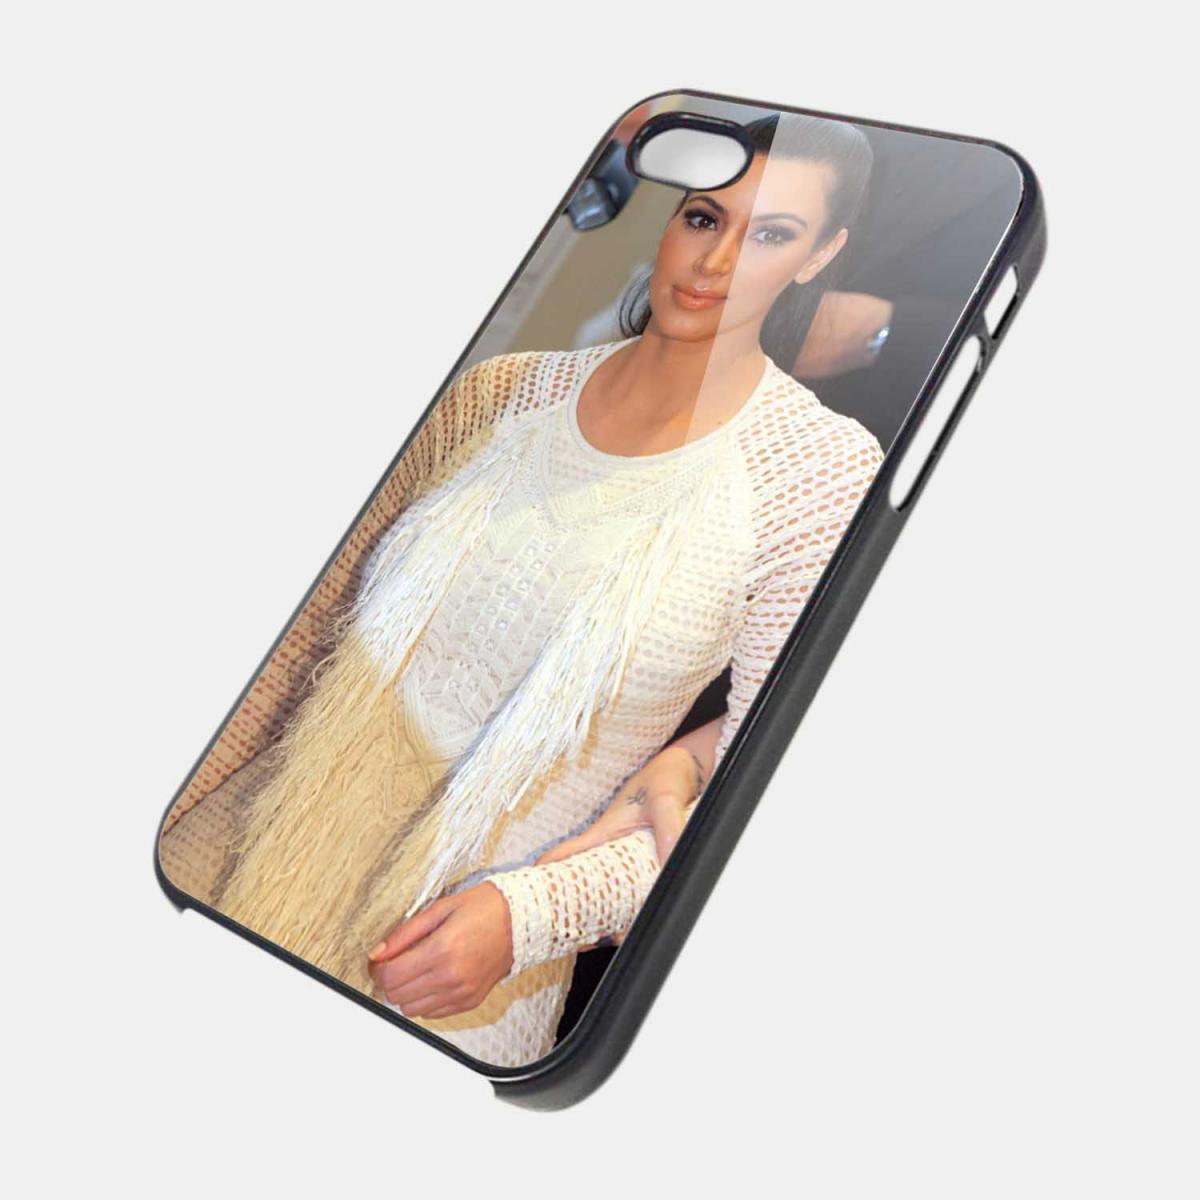 Kim Kardashian Special Design Iphone 4 Case Cover